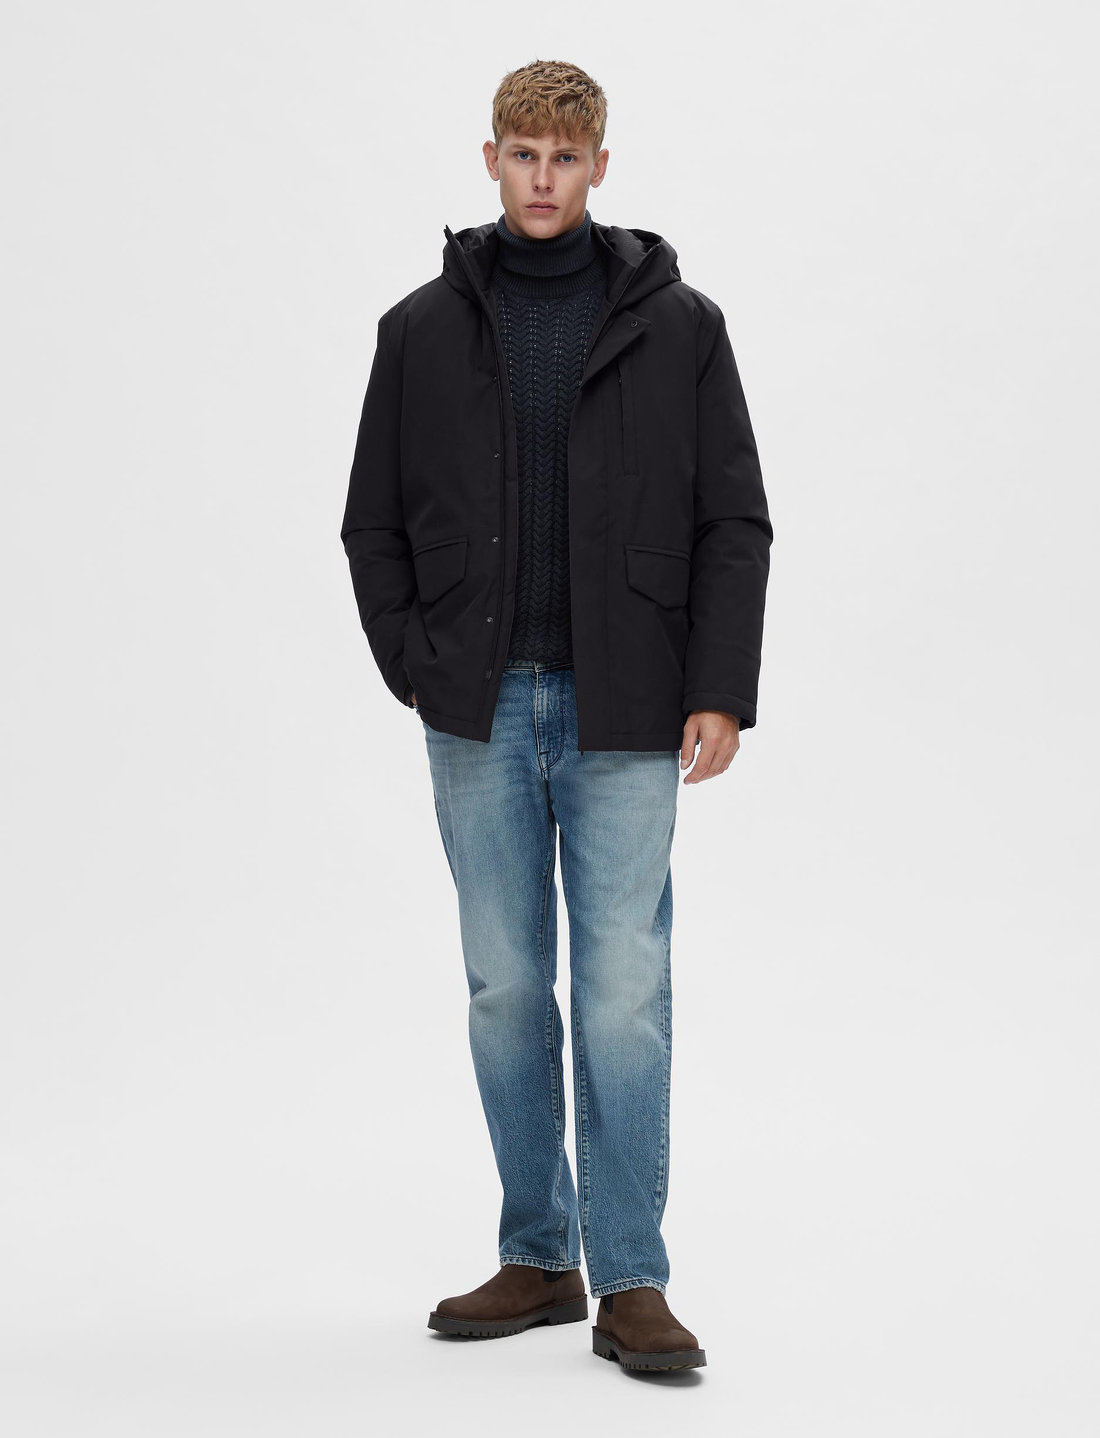 – Homme Selected shop jackets at – coats Slhpiet Jacket & Booztlet